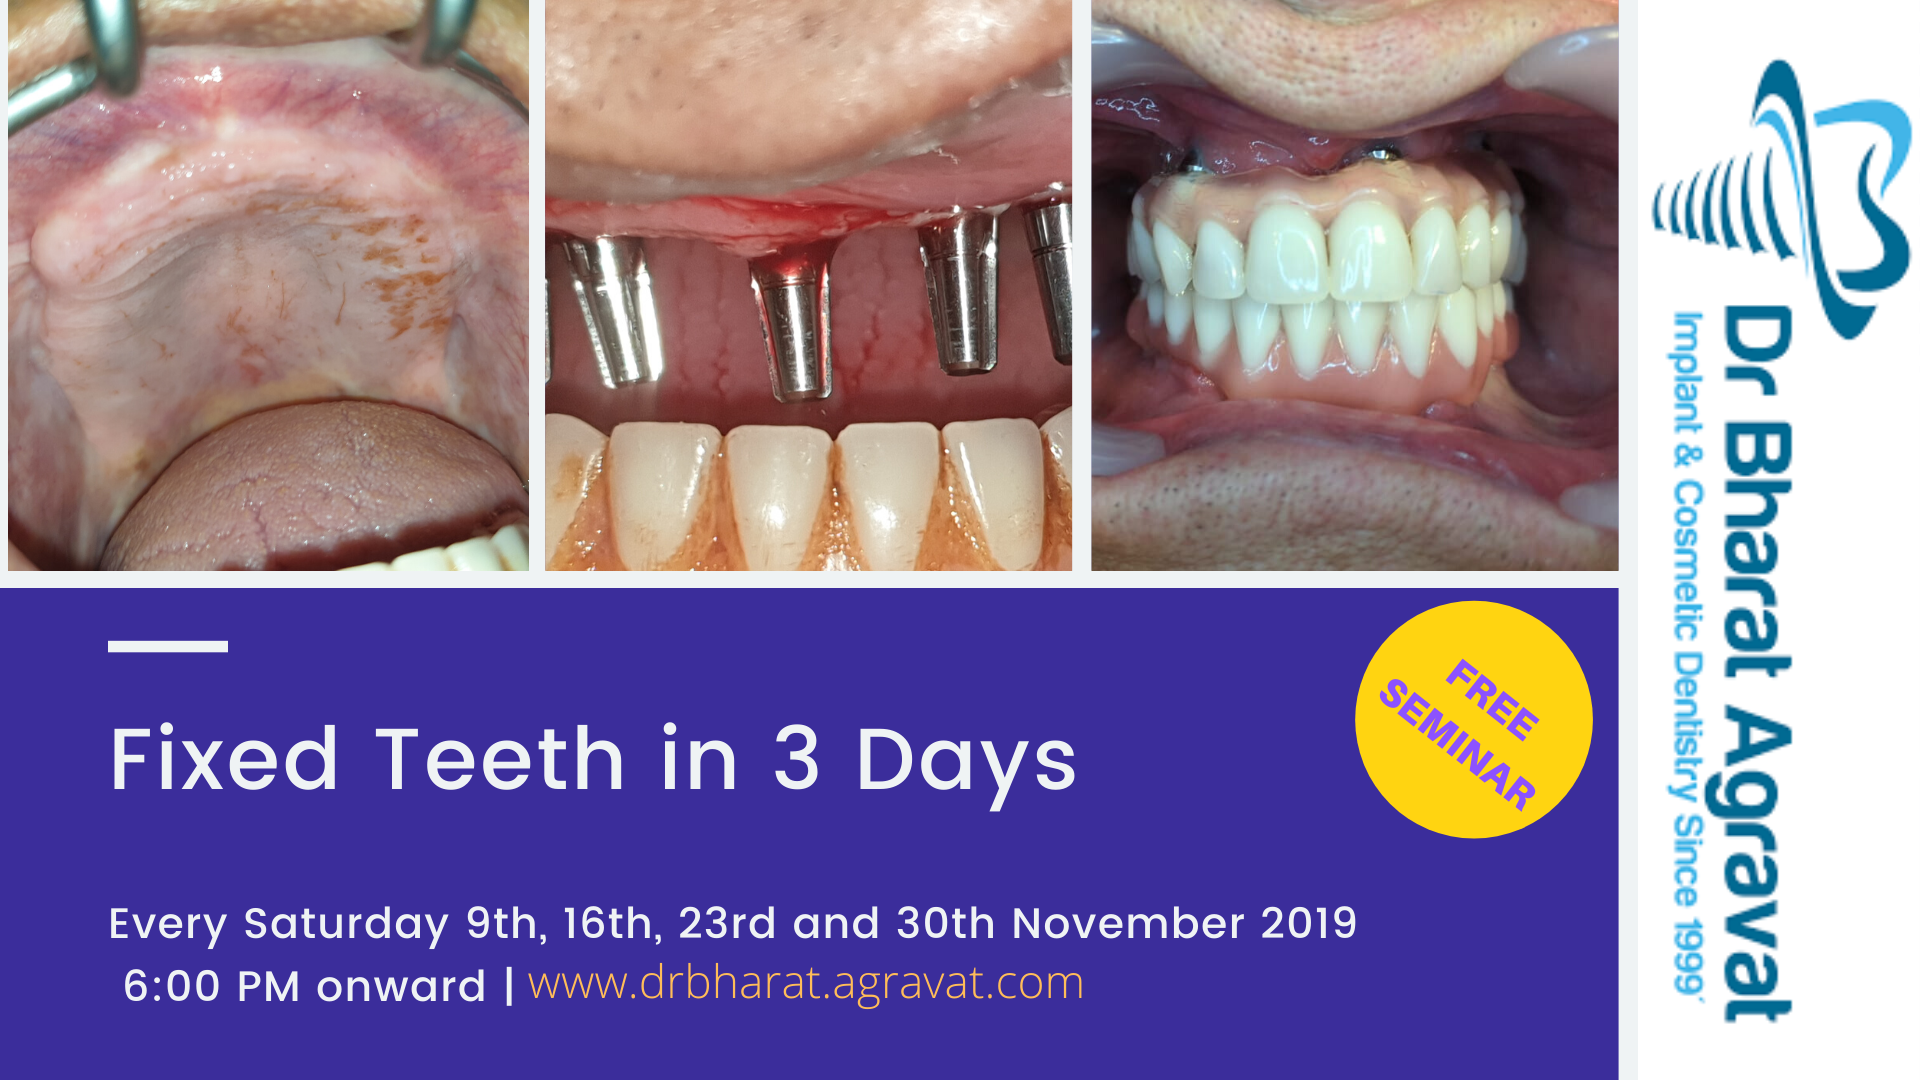 Permanent Fixed New Teeth in 3 Days by Dental Implants in Ahmedabad Gujarat India, Ahmedabad, Gujarat, India